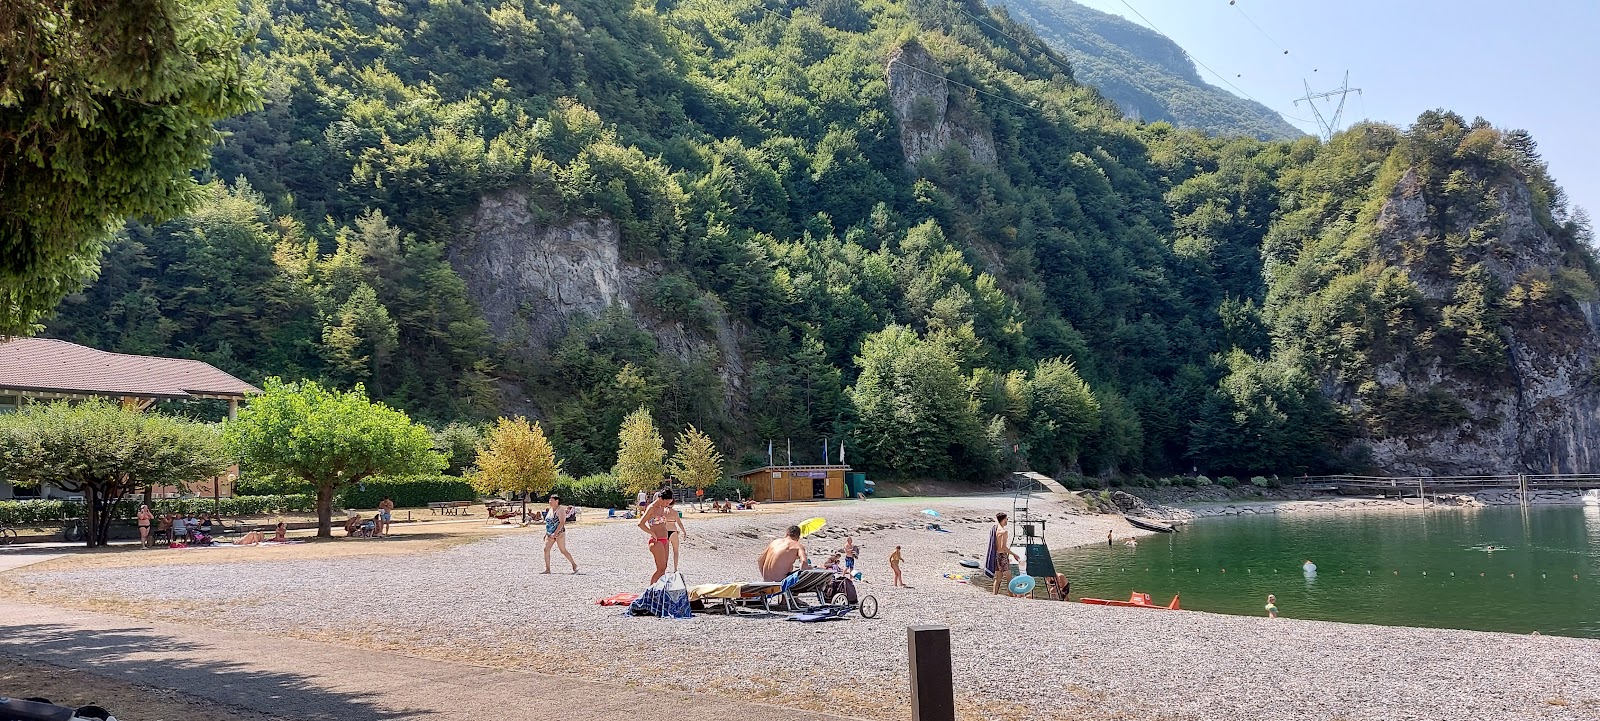 Spiaggia di Camping Miralago'in fotoğrafı imkanlar alanı